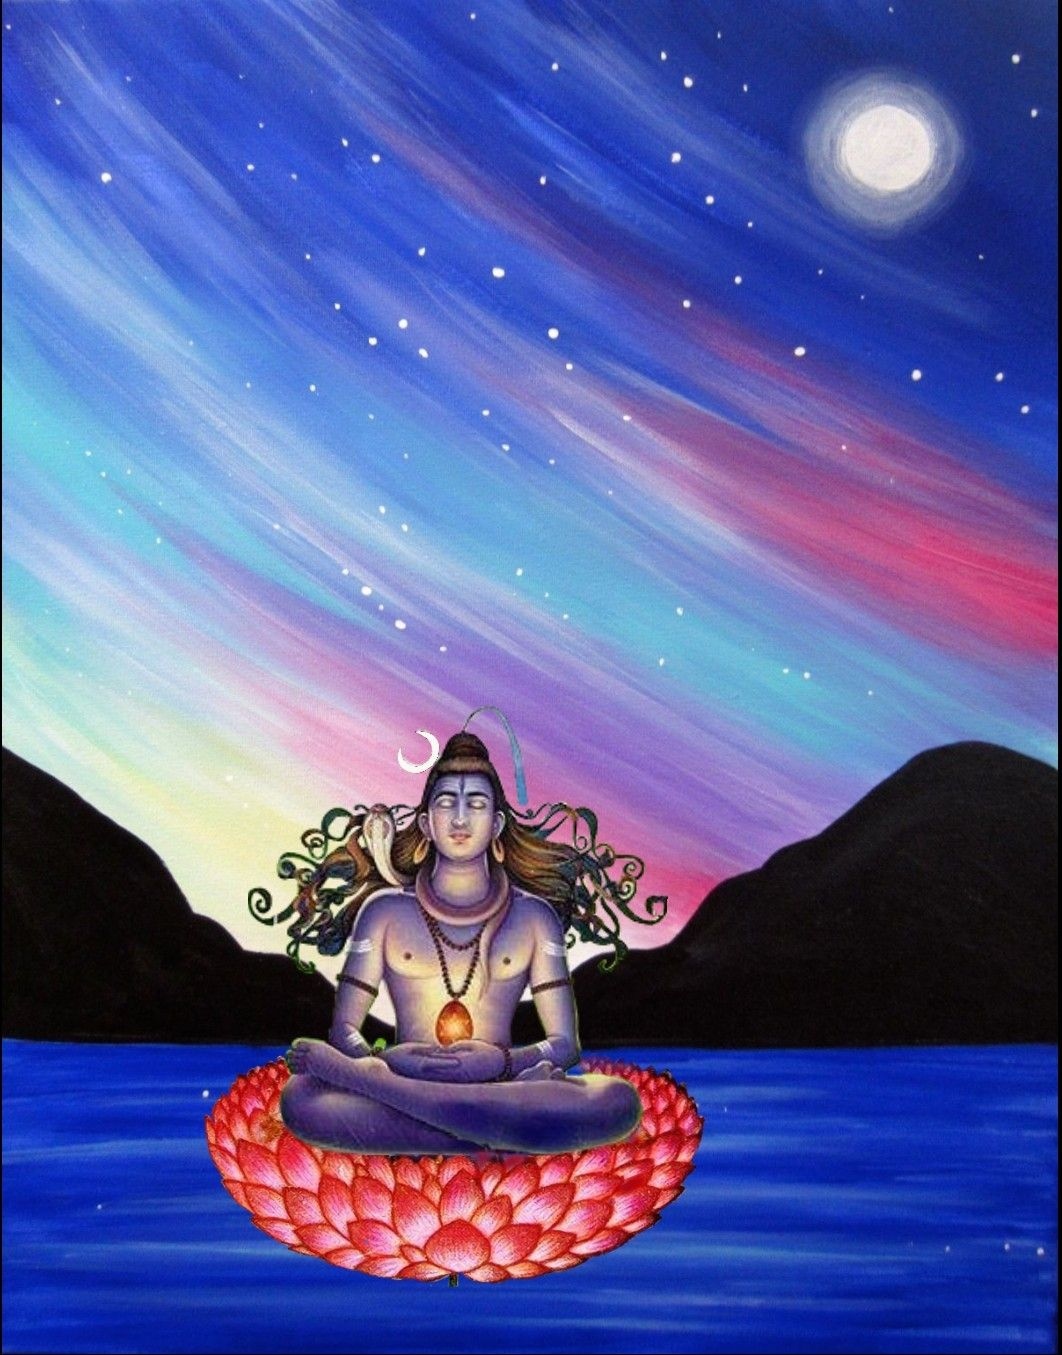 Sivan Images - River - Lotus Background